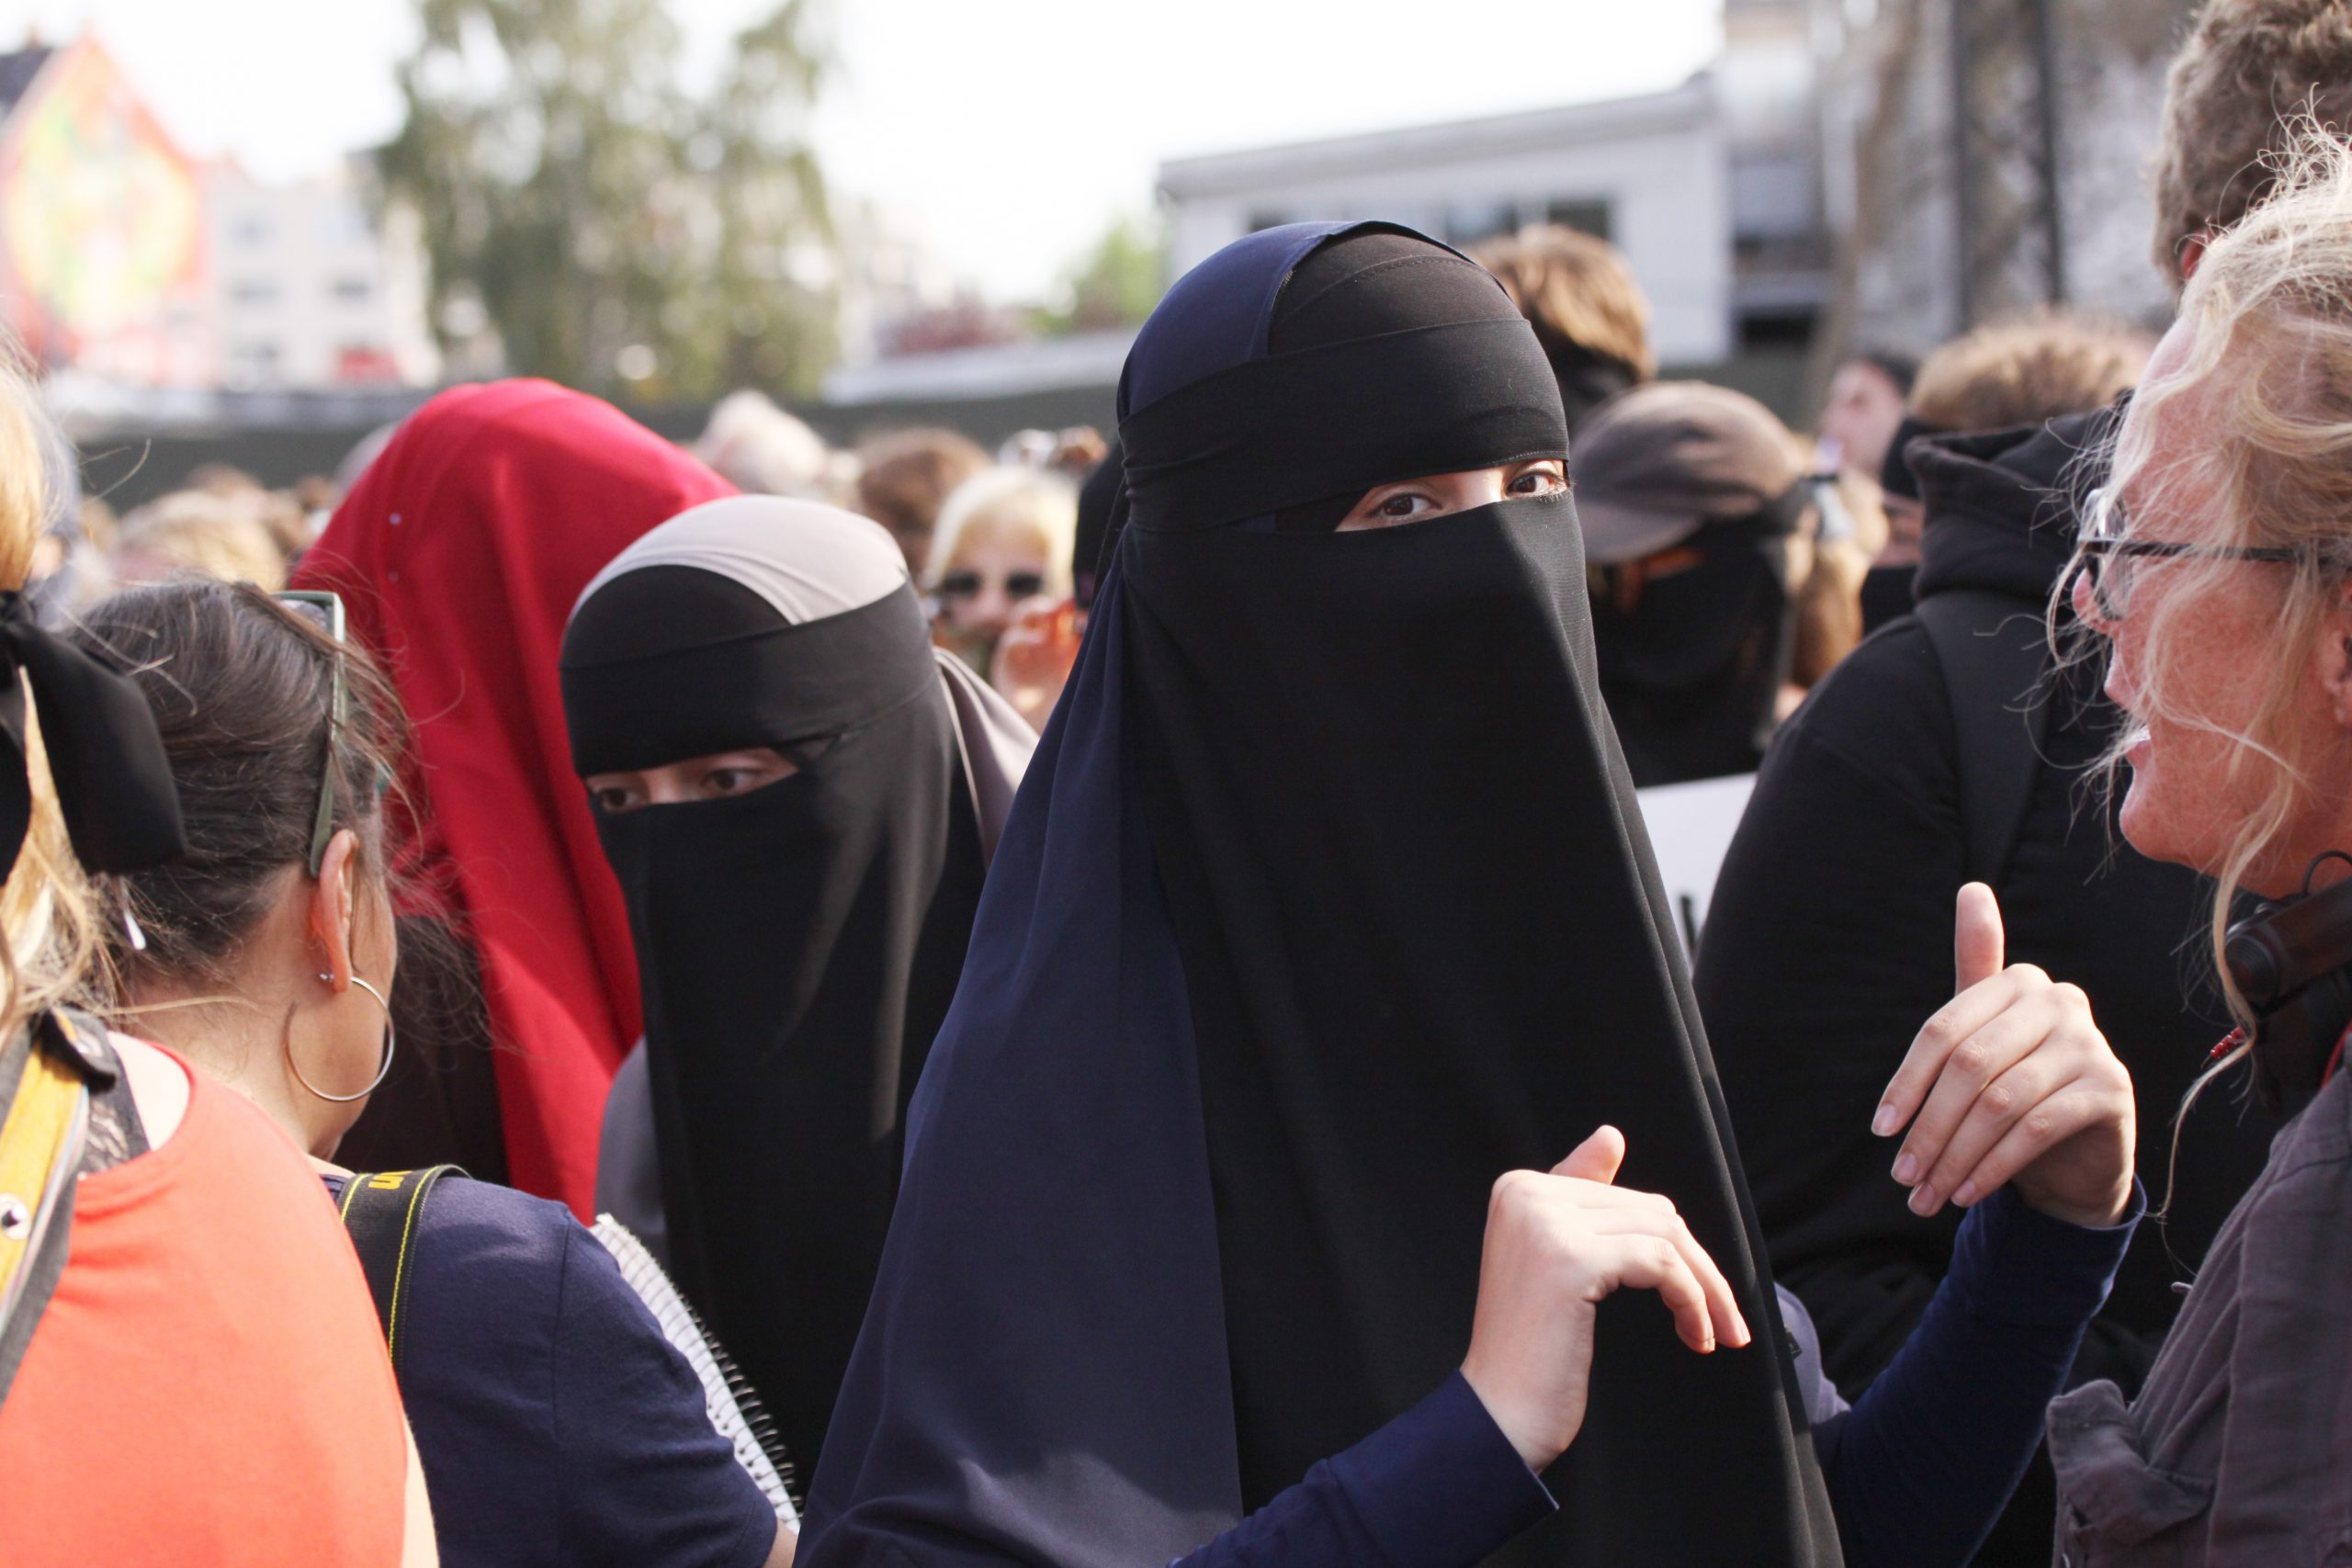 Sri Lanka announces plan to ban burka and close Islamic schools